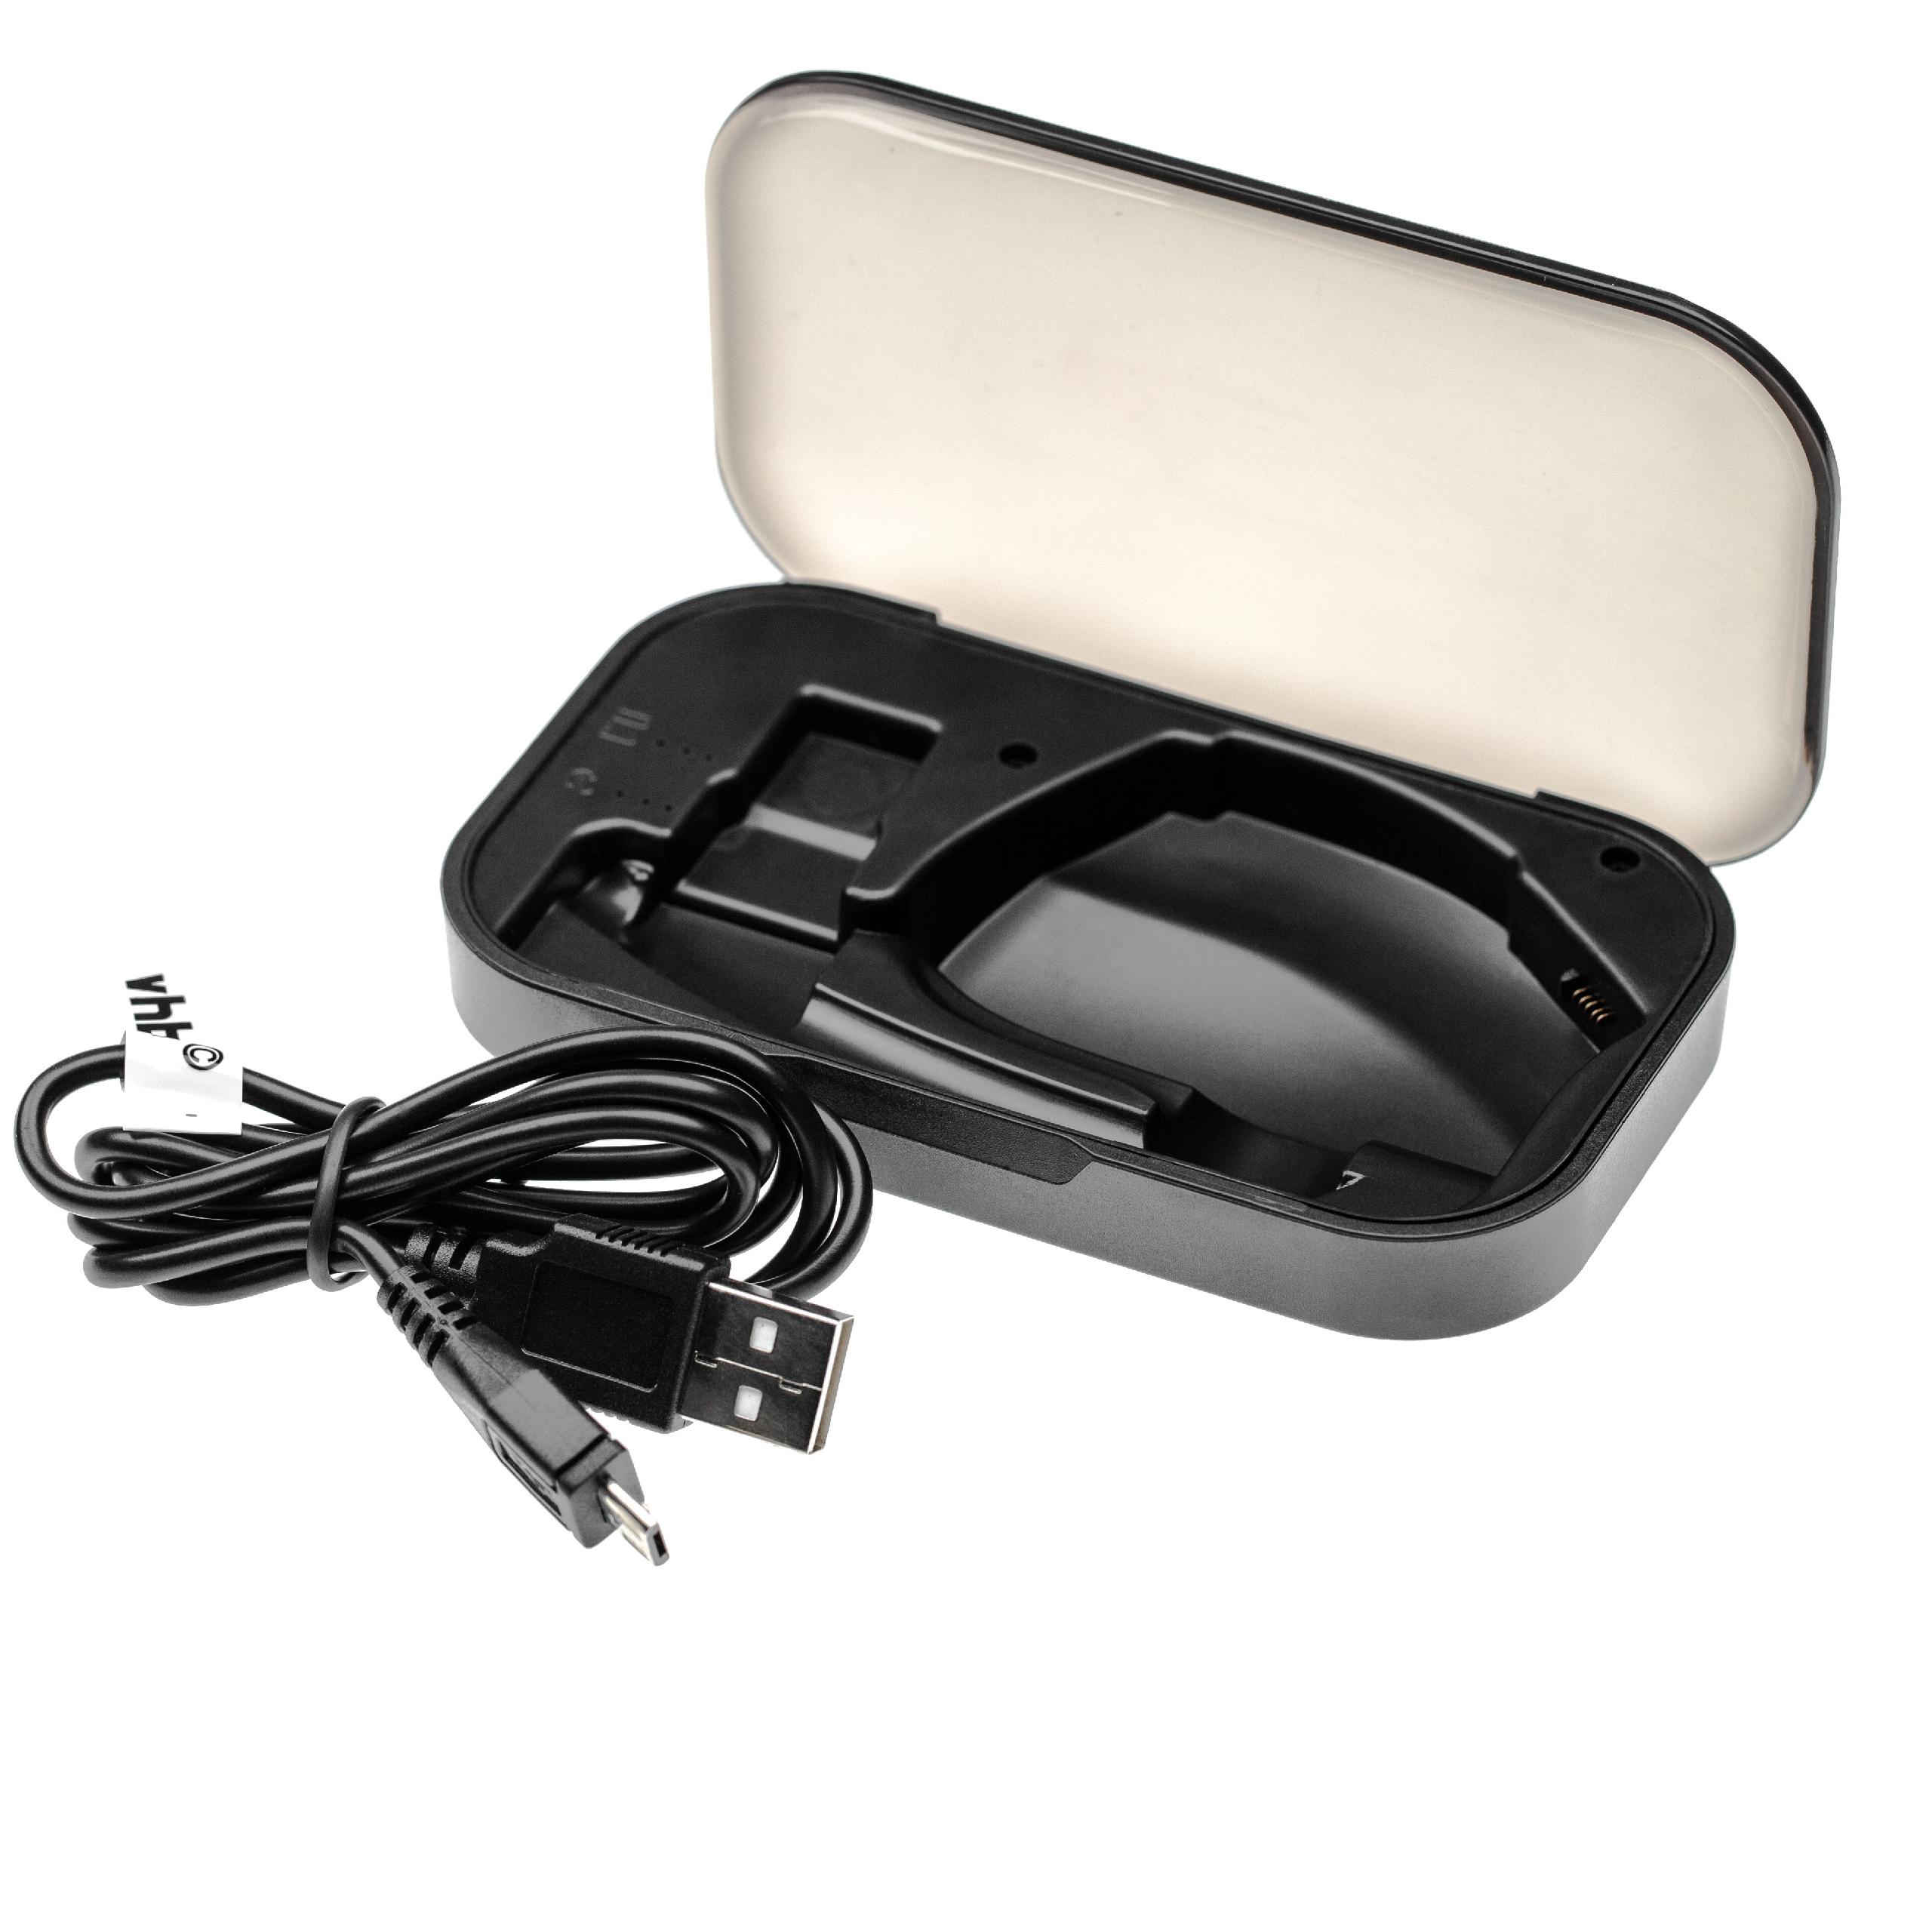 Caja de carga para auriculares Plantronics Voyager Legend UC - Incl. cable de carga USB negro